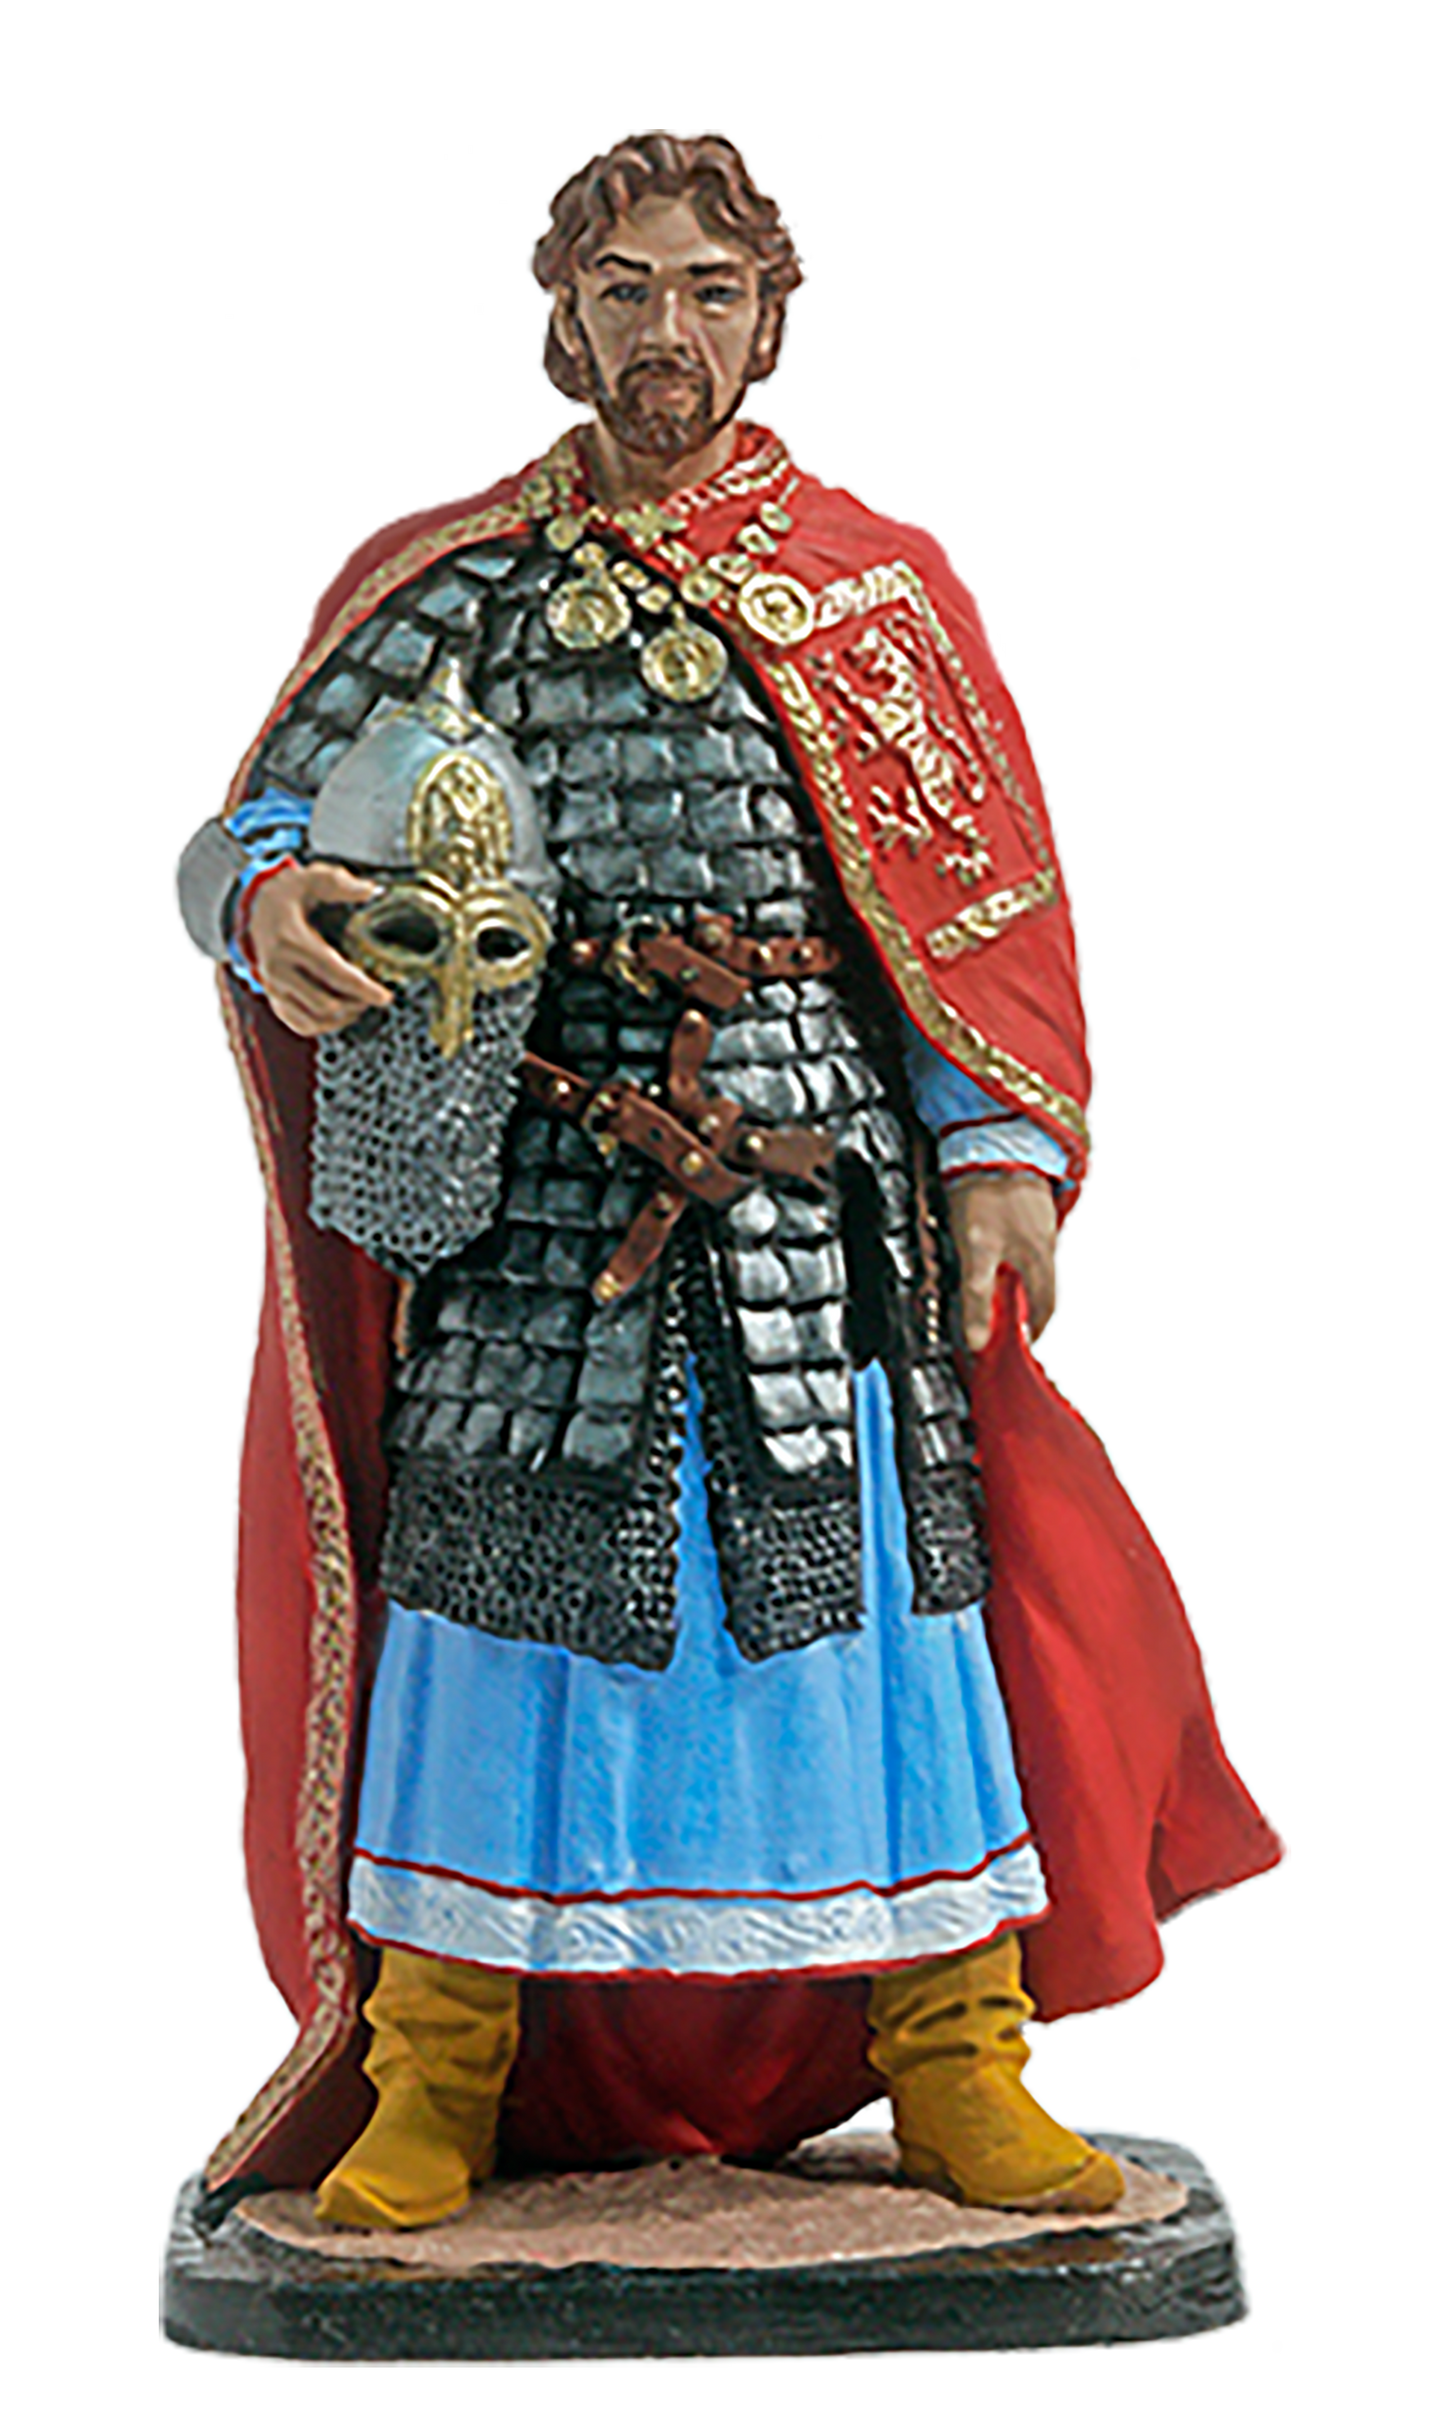 EK-M278-P - 	русский князь Александр Ярославович Невский (1220-1263 гг.) (раскрашенная миниатюра)